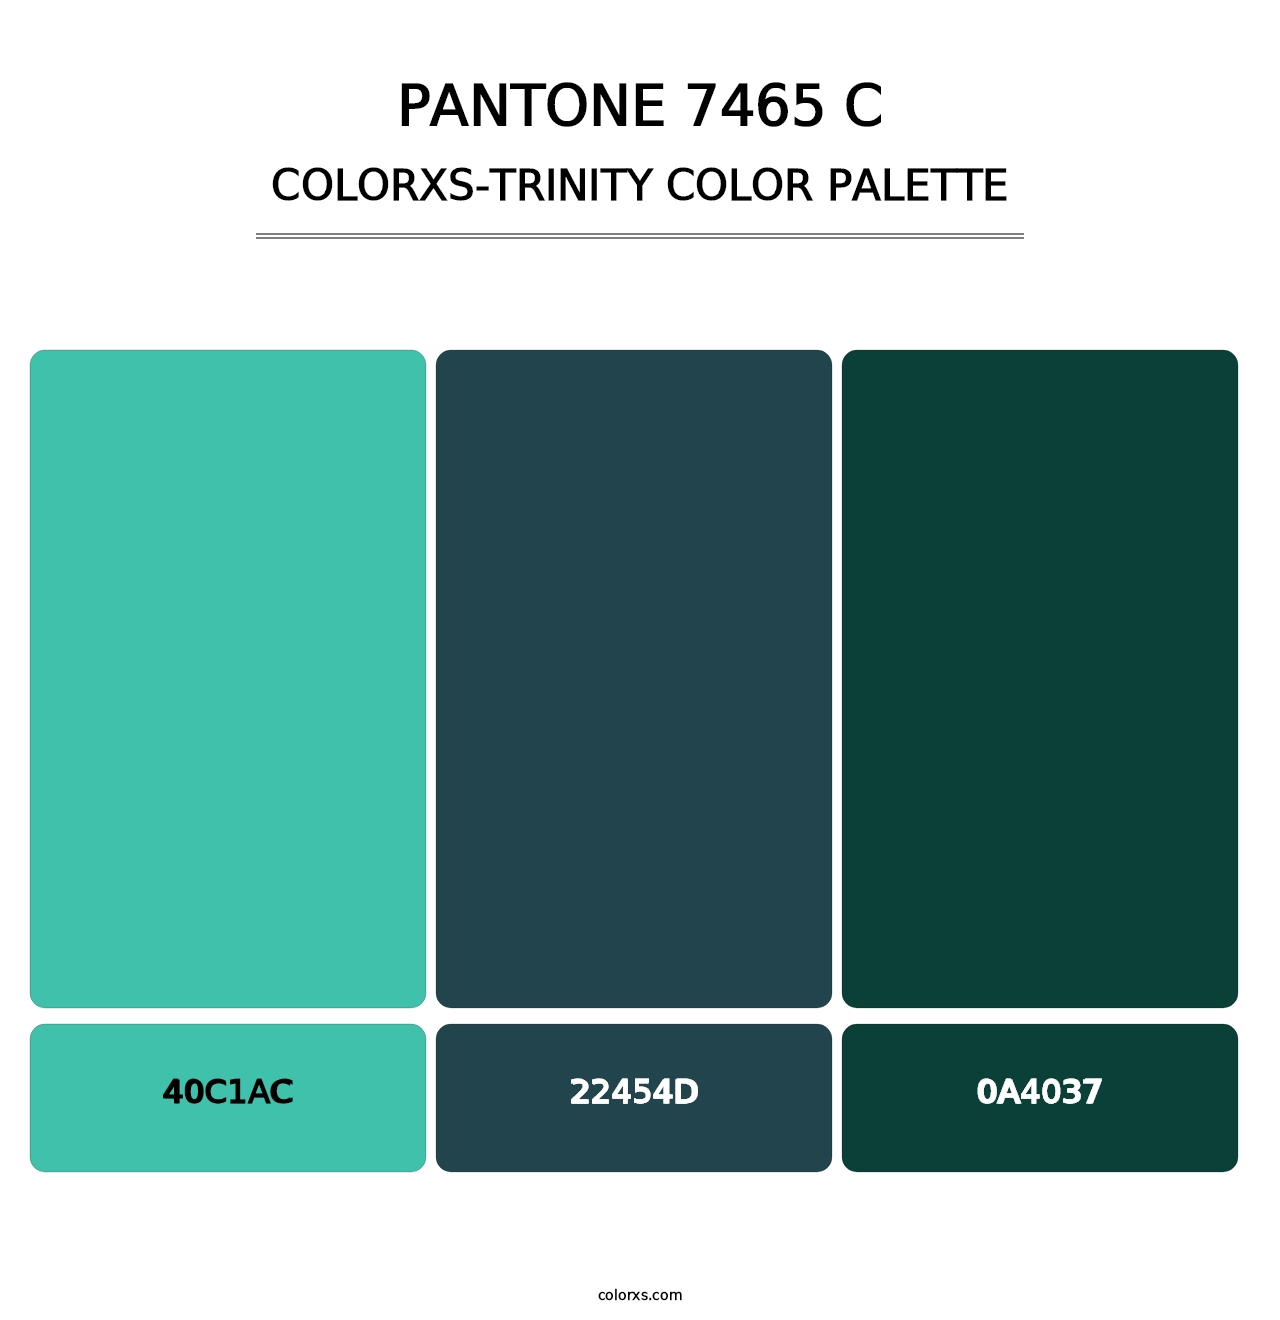 PANTONE 7465 C - Colorxs Trinity Palette